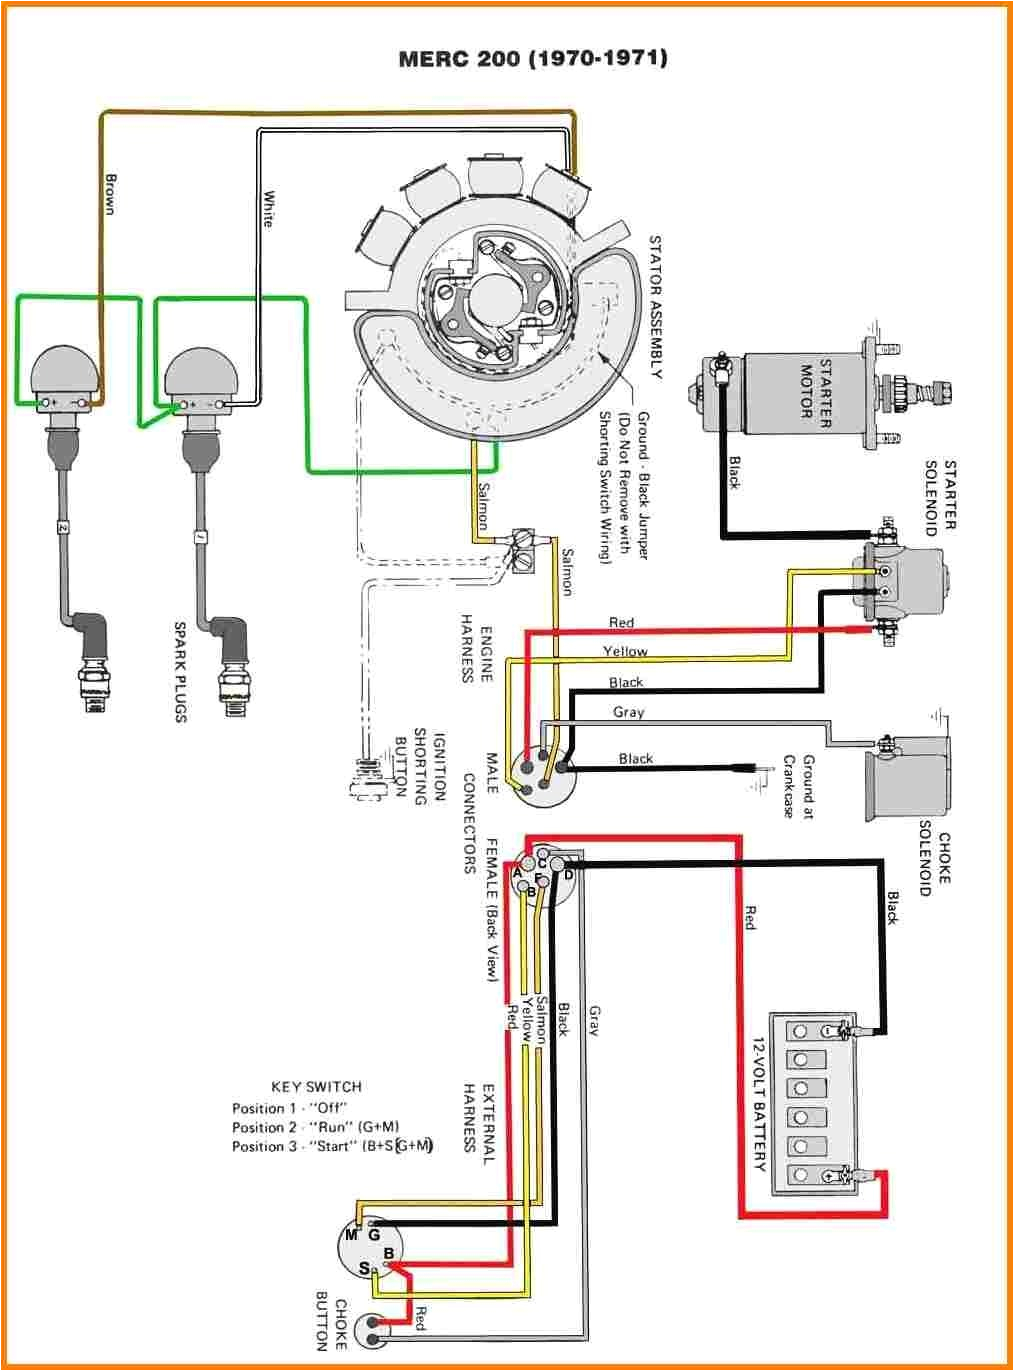 yamaha 703 remote control wiring diagram mercury outboard wiring diagram inspirational yamaha 703 remote control wiring diagram dolgular 15b jpg